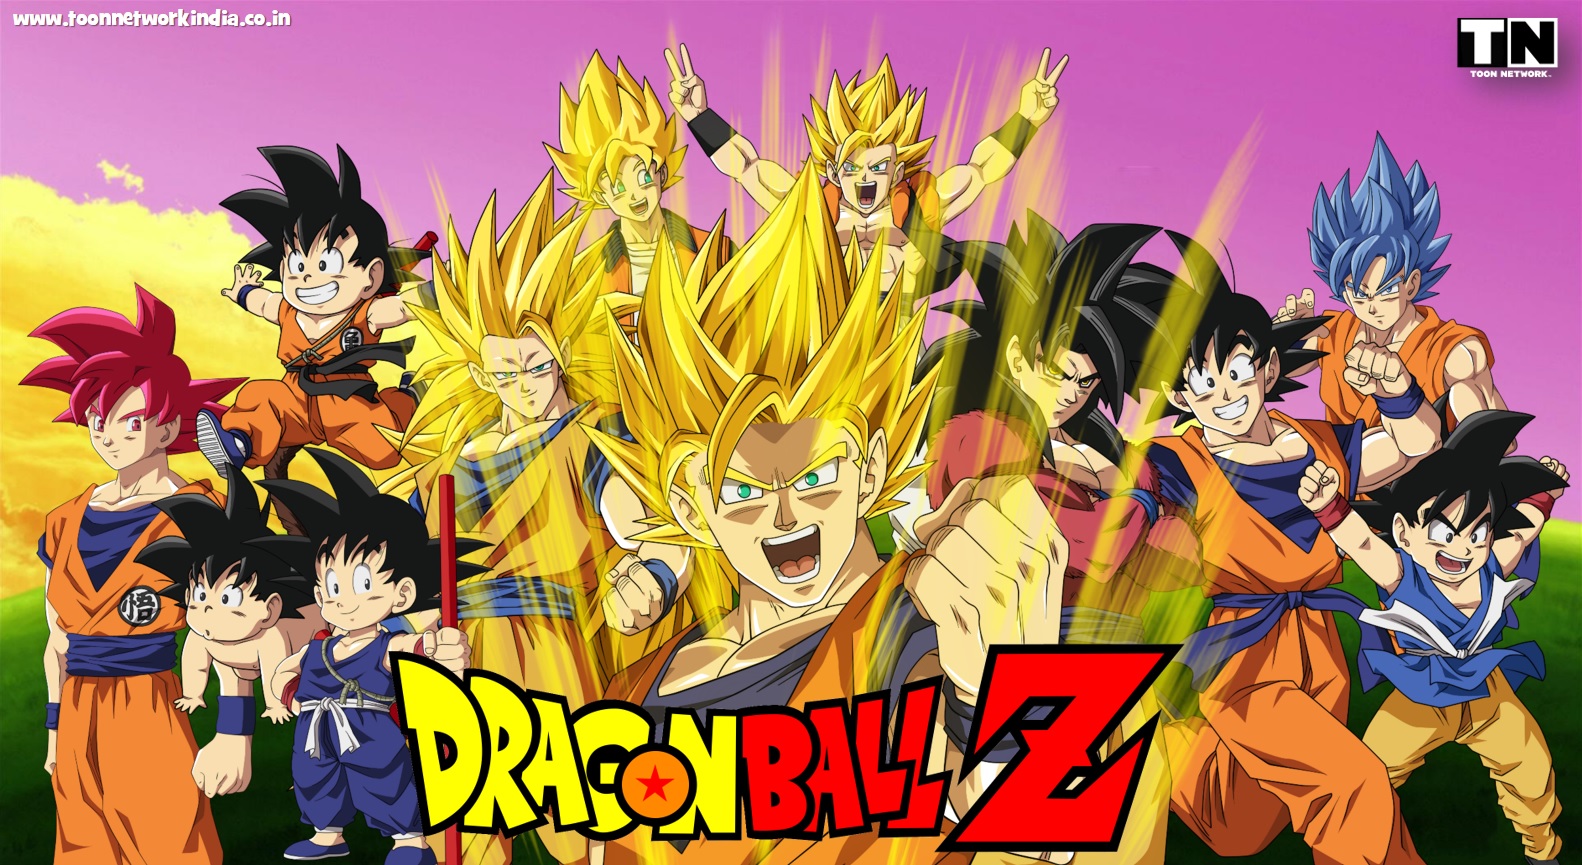 Dragon Ball Z image - Anime Fans of DBolical - Mod DB